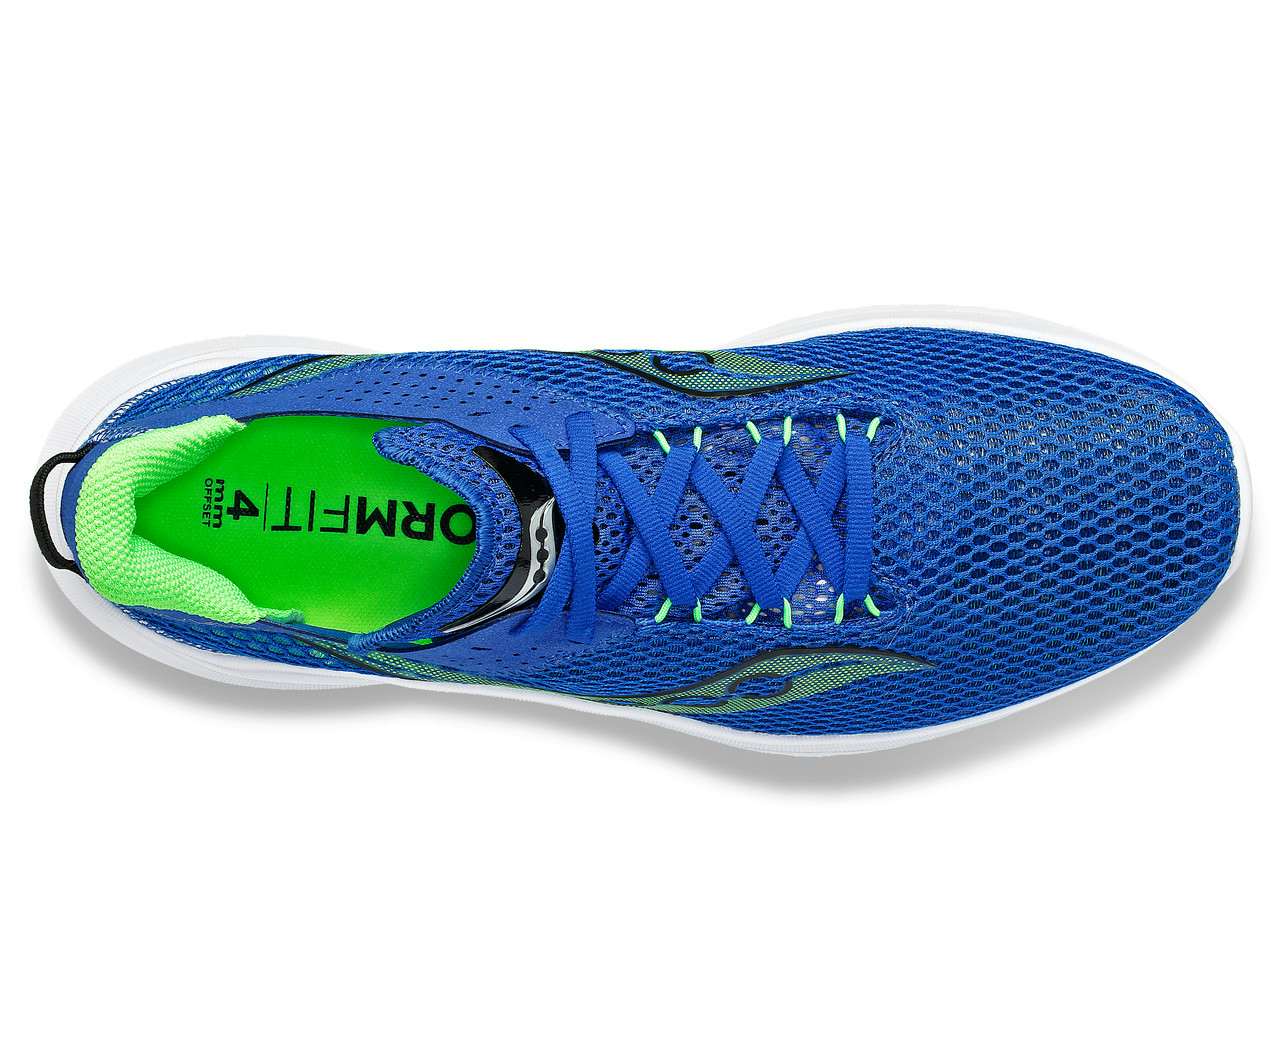 Chaussures de course Kinvara 14 Bleu super/Slime